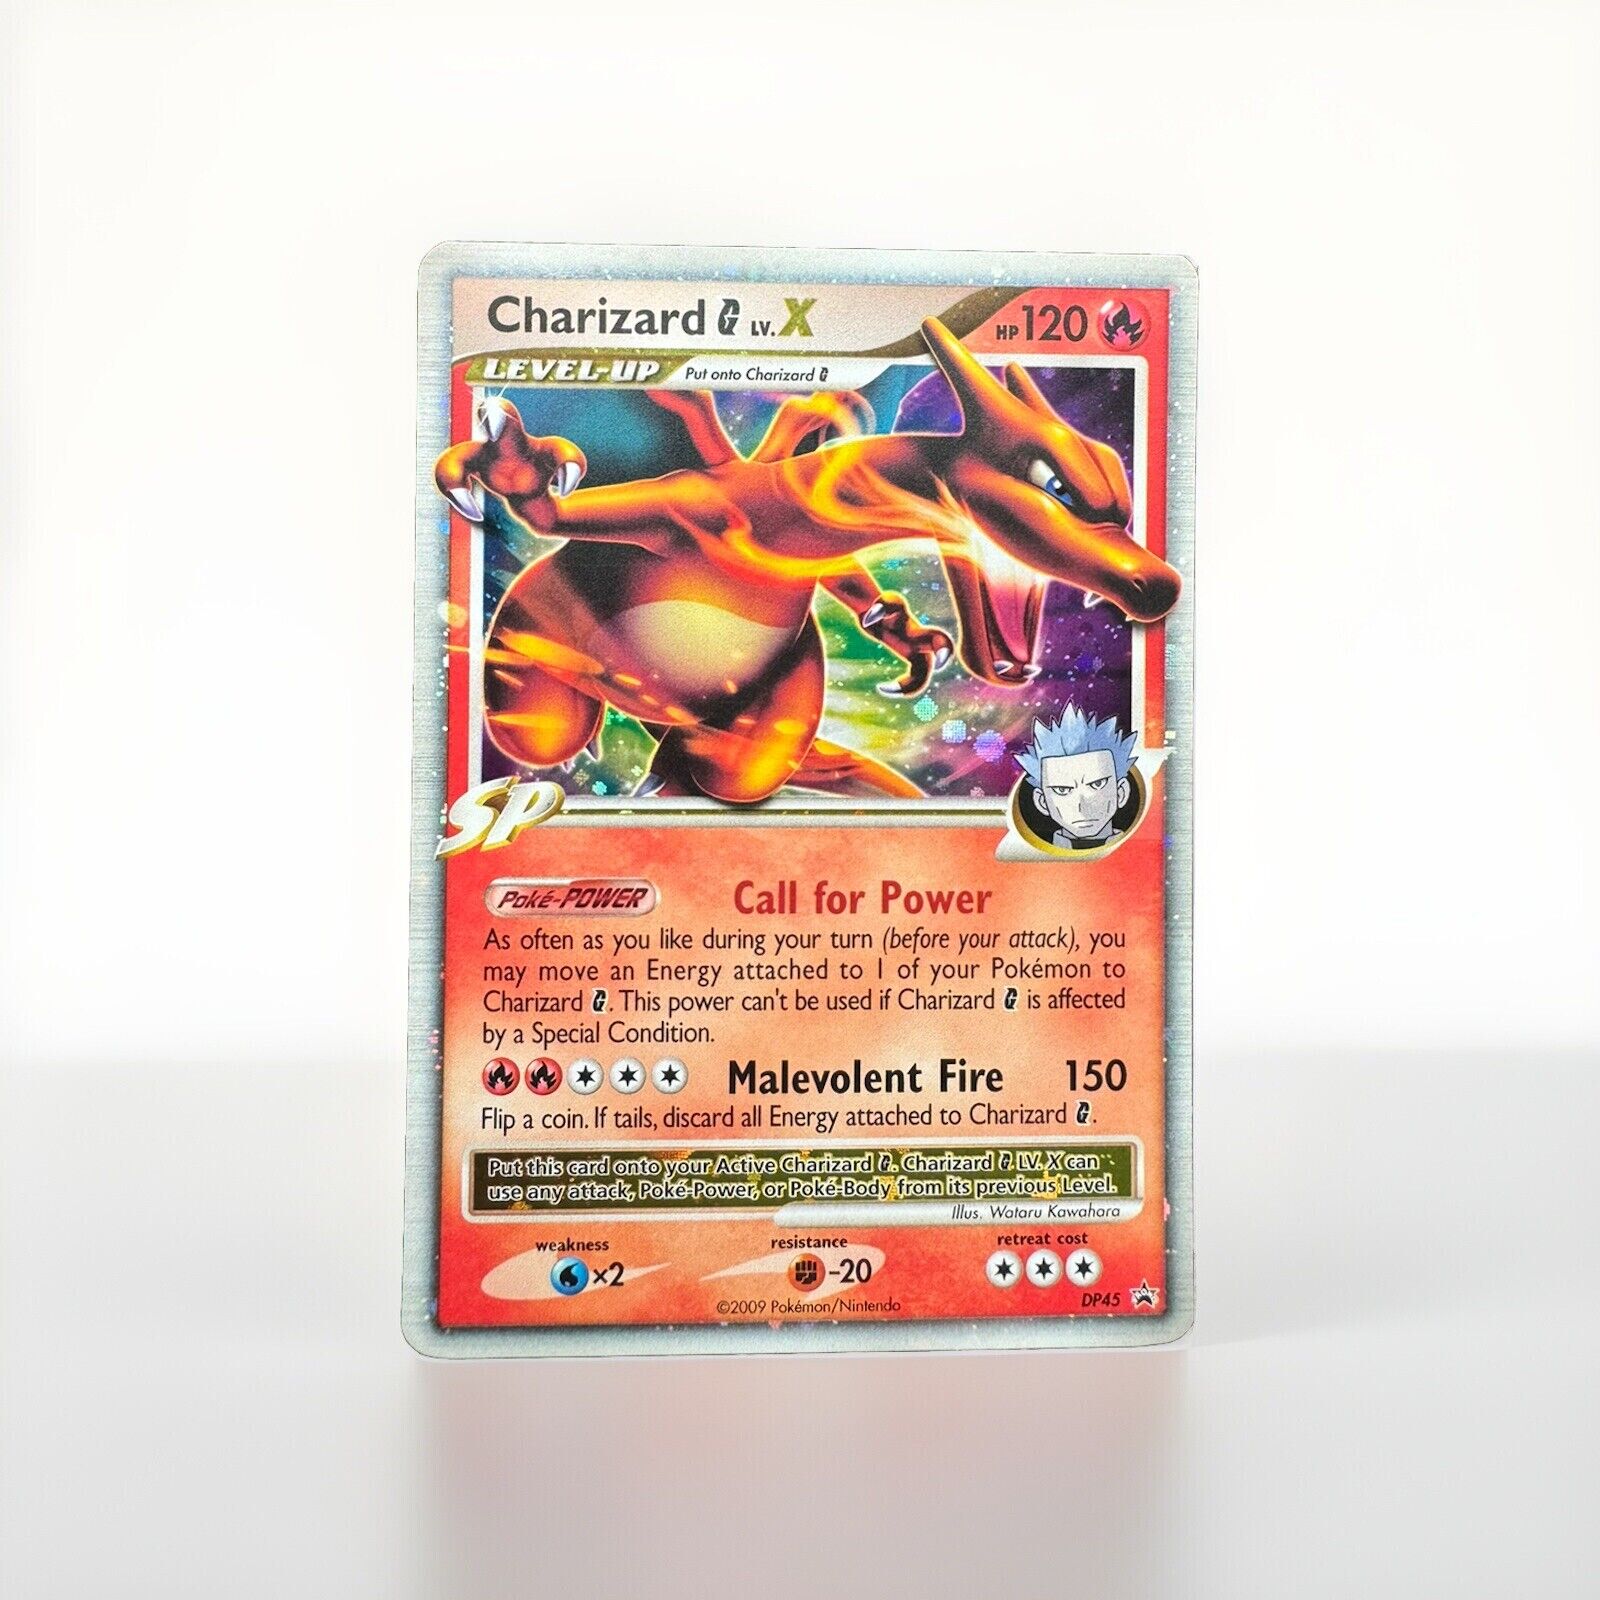 Pokémon - Charizard G LV X DP45 Black Star Promo Card. - SP - 2009